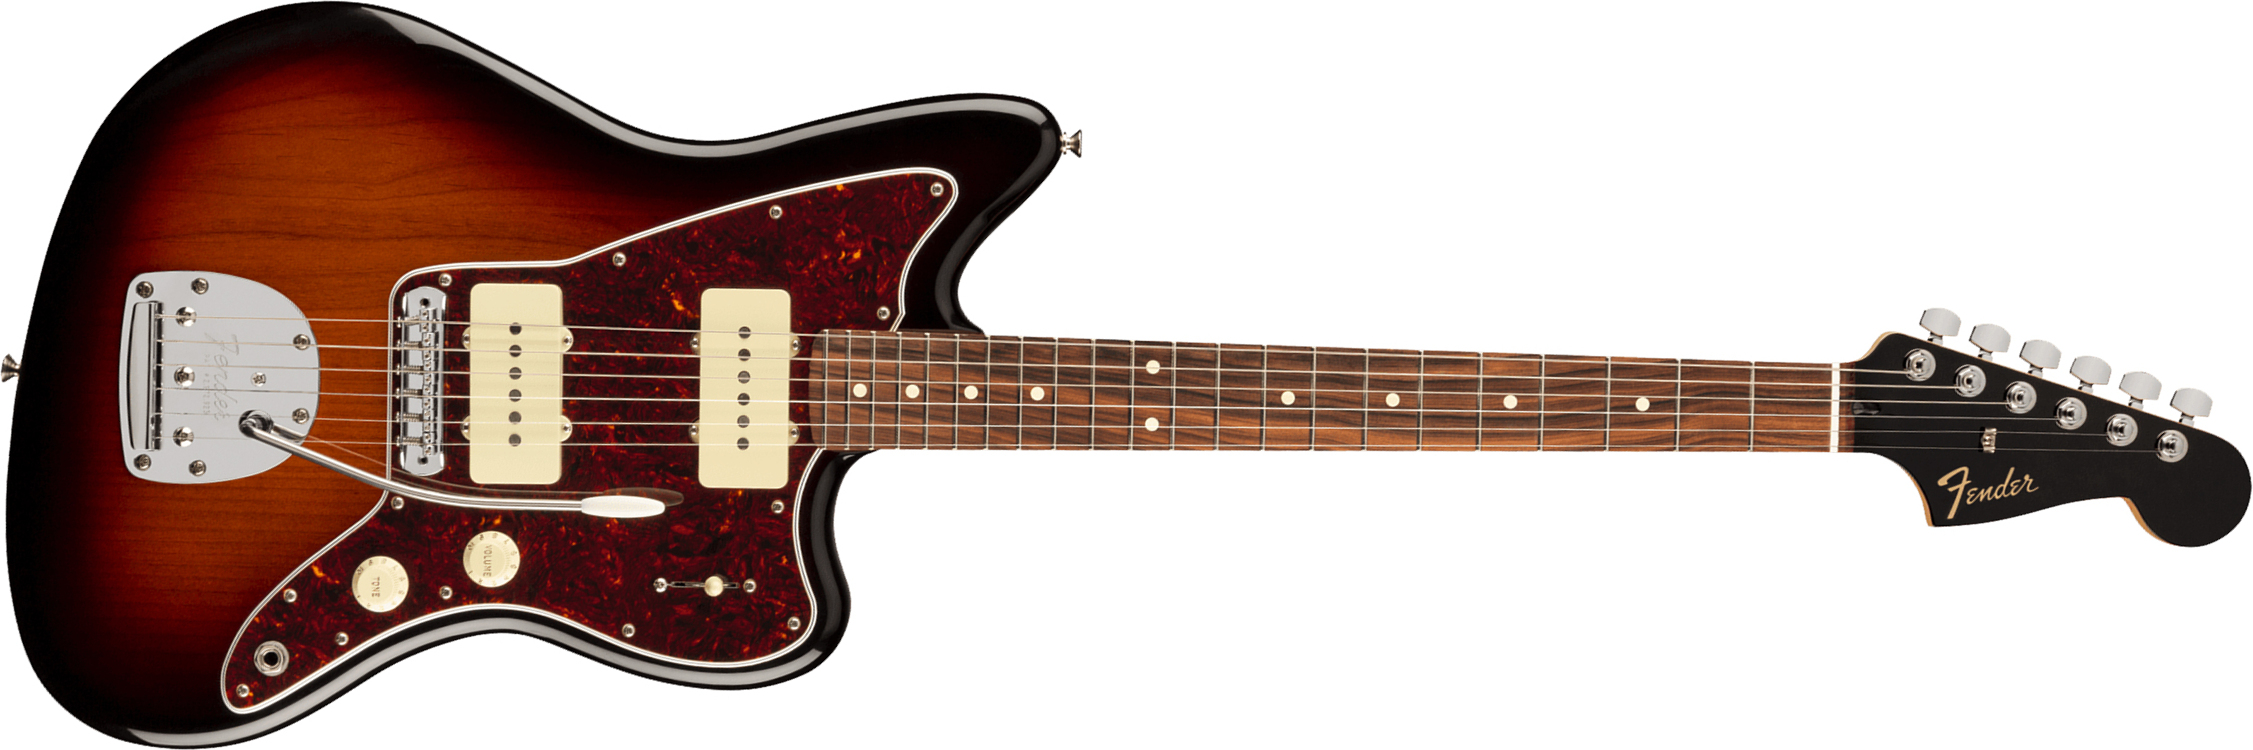 Fender Jazzmaster Player Ltd 2s Trem Pf - 3-color Sunburst - Retro-rock elektrische gitaar - Main picture